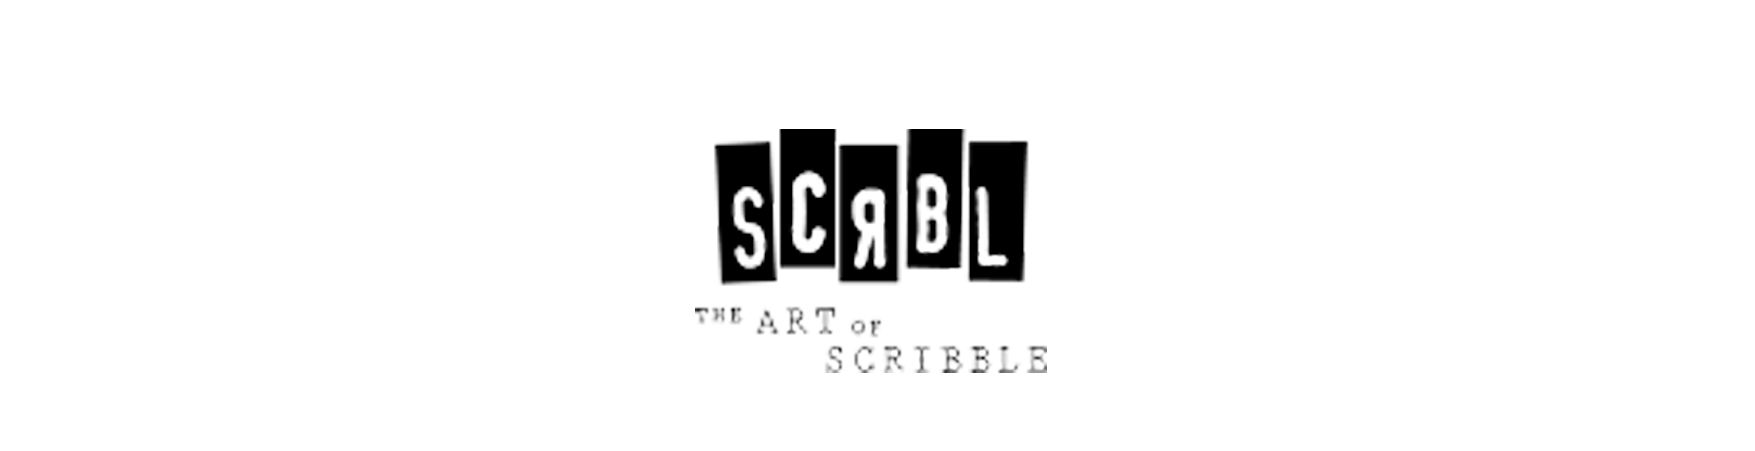 The Art of Scribble